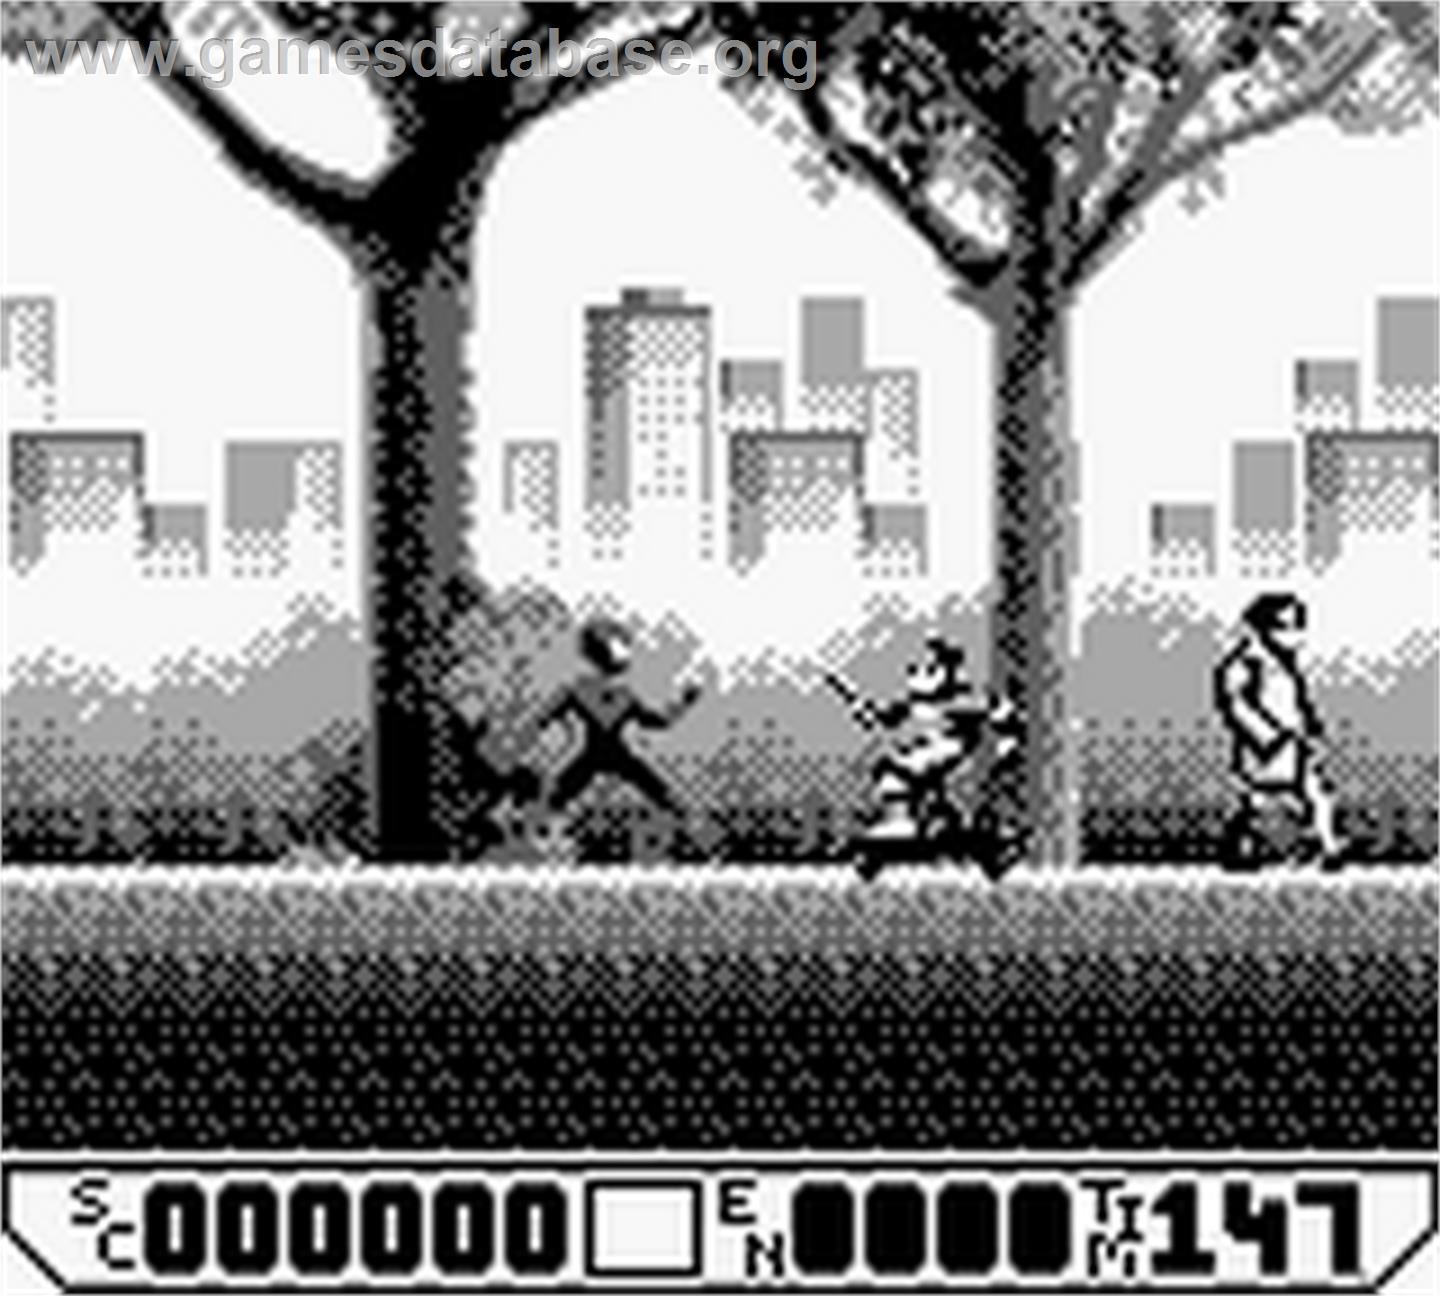 Amazing Spider-Man 3: Invasion of the Spider-Slayers - Nintendo Game Boy - Artwork - In Game